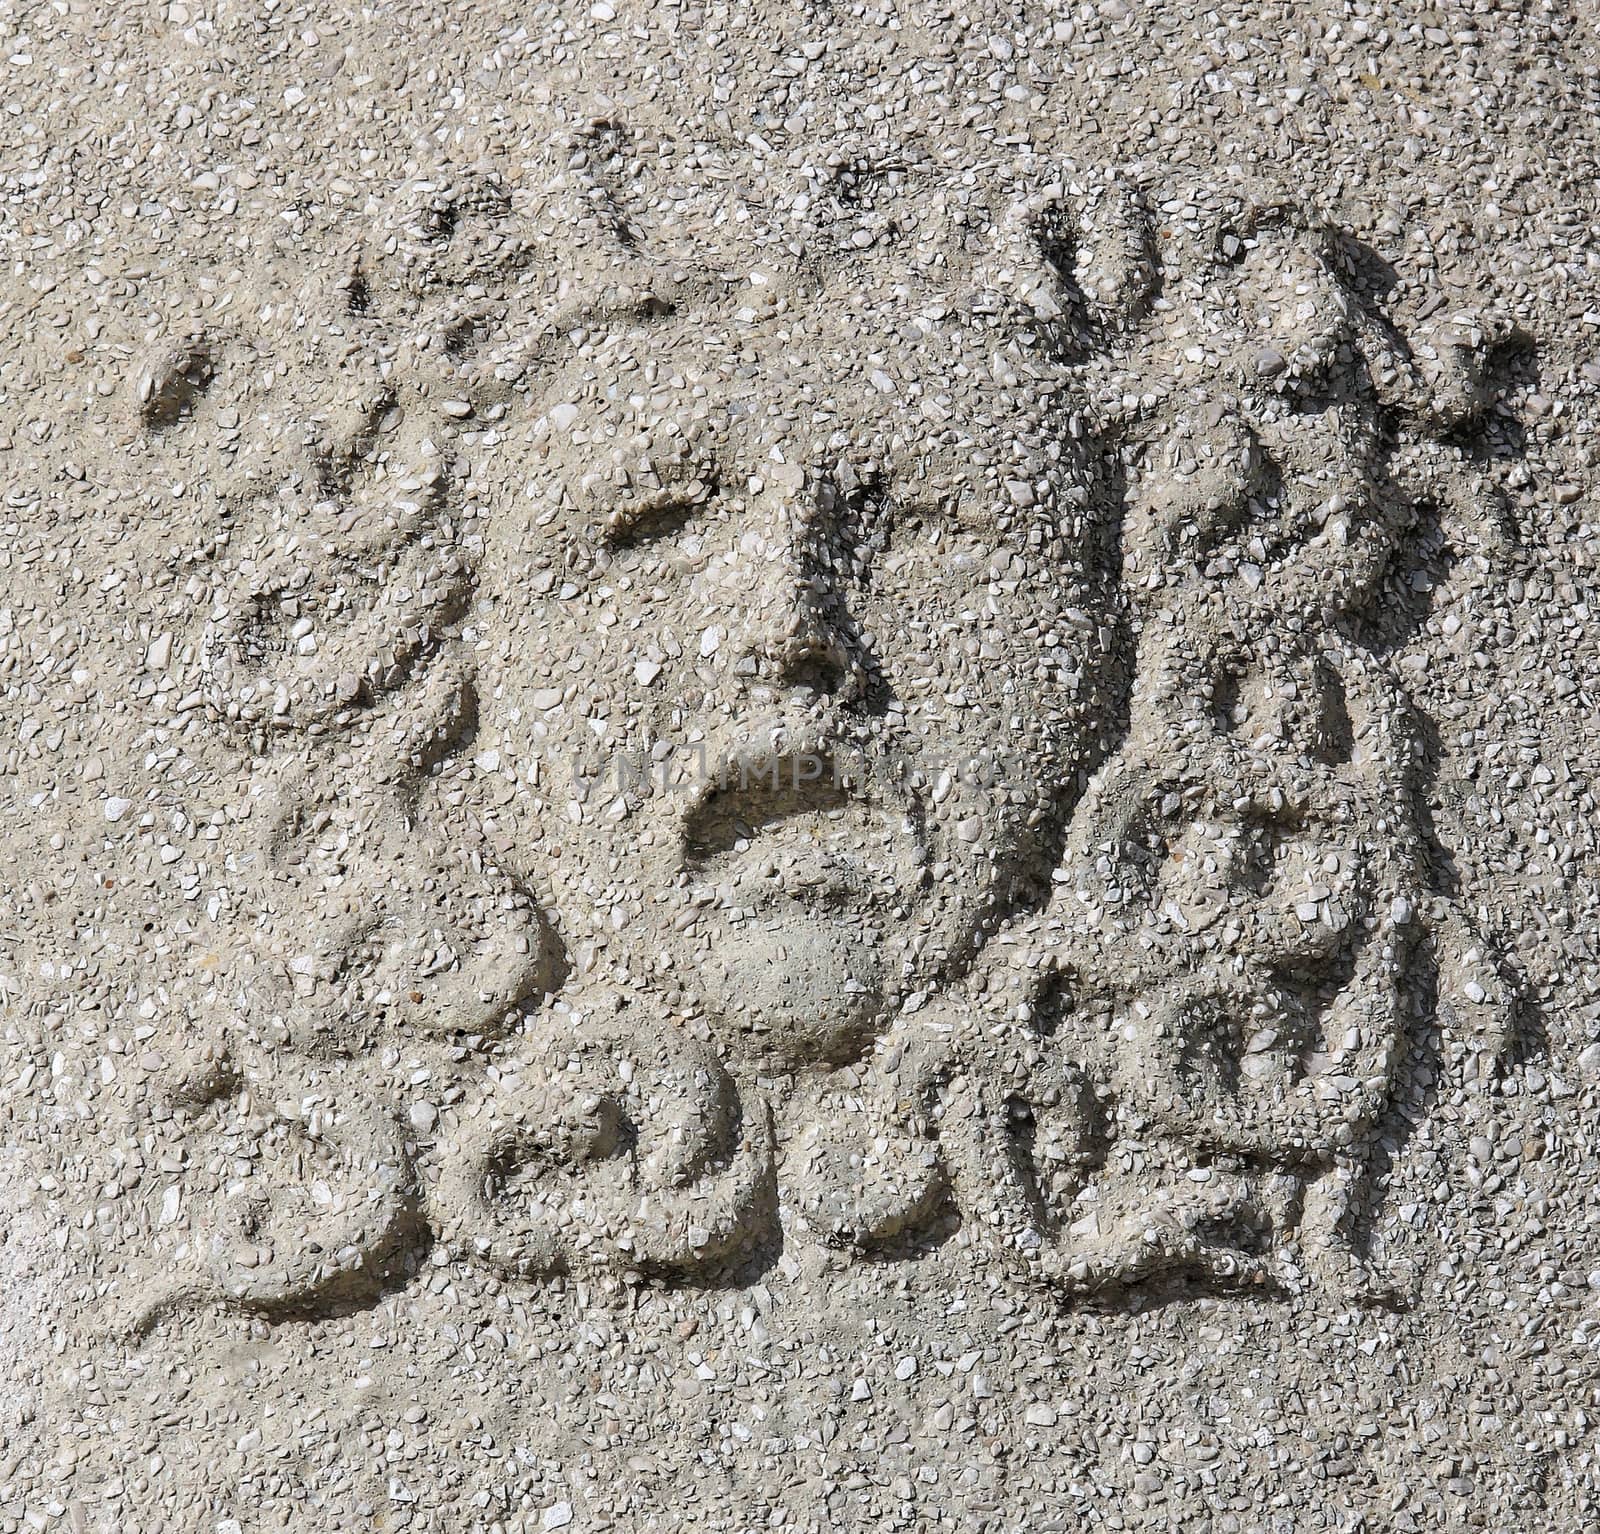 stone face3 by gallofoto